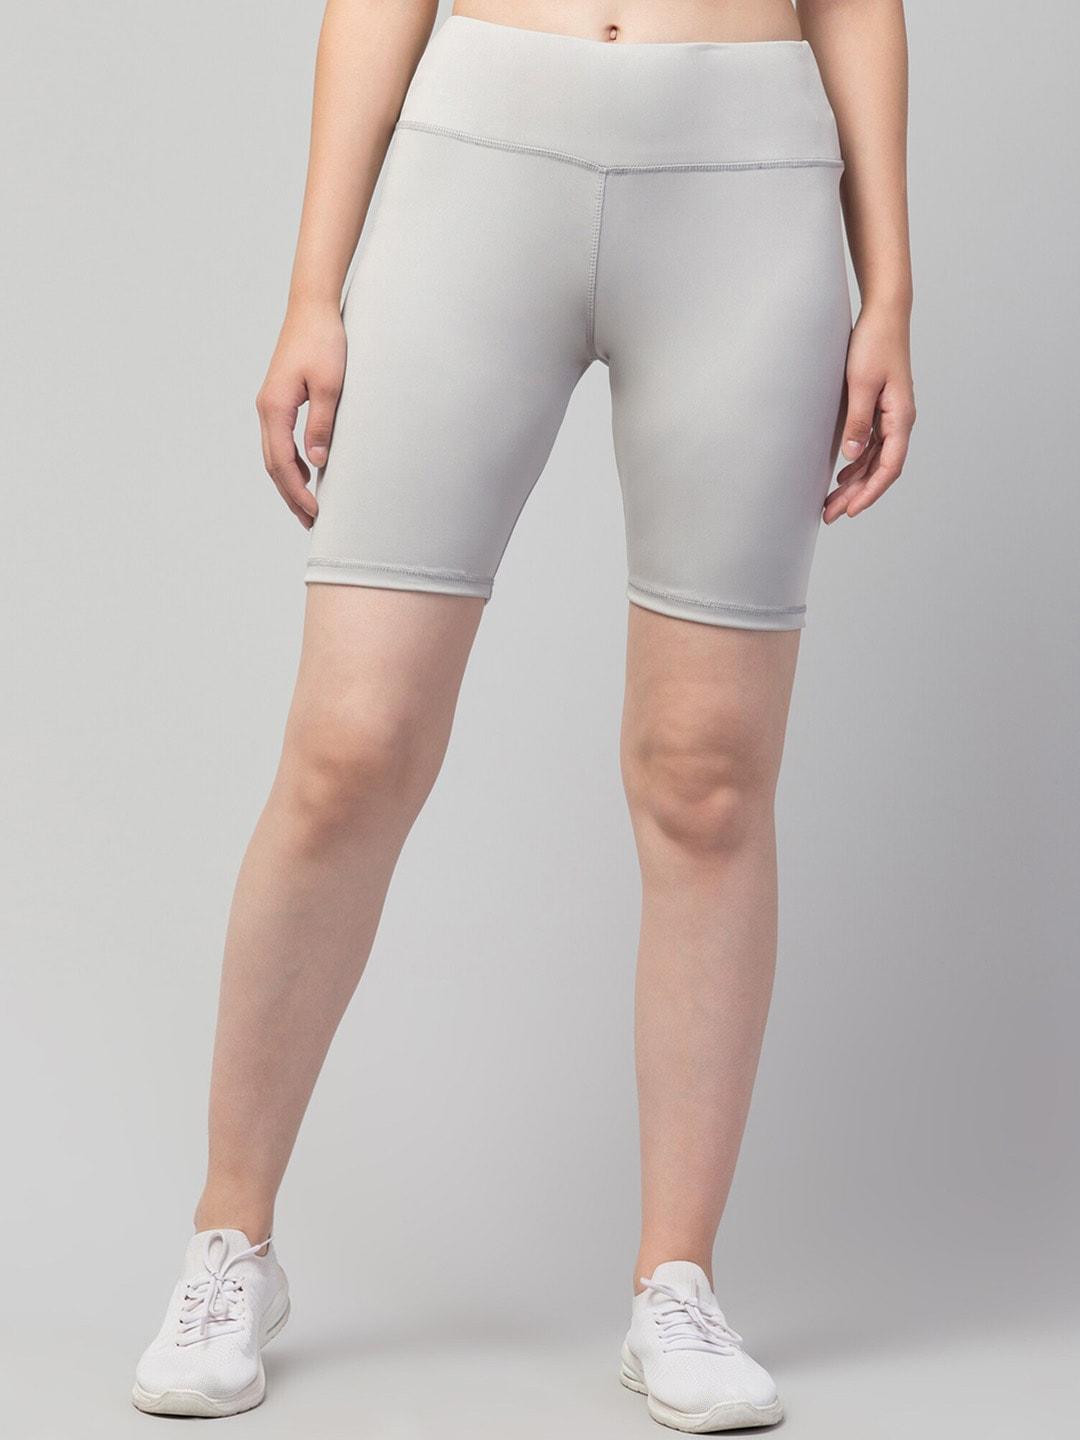 apraa-&-parma-women-skinny-fit-high-rise-yoga-sports-shorts